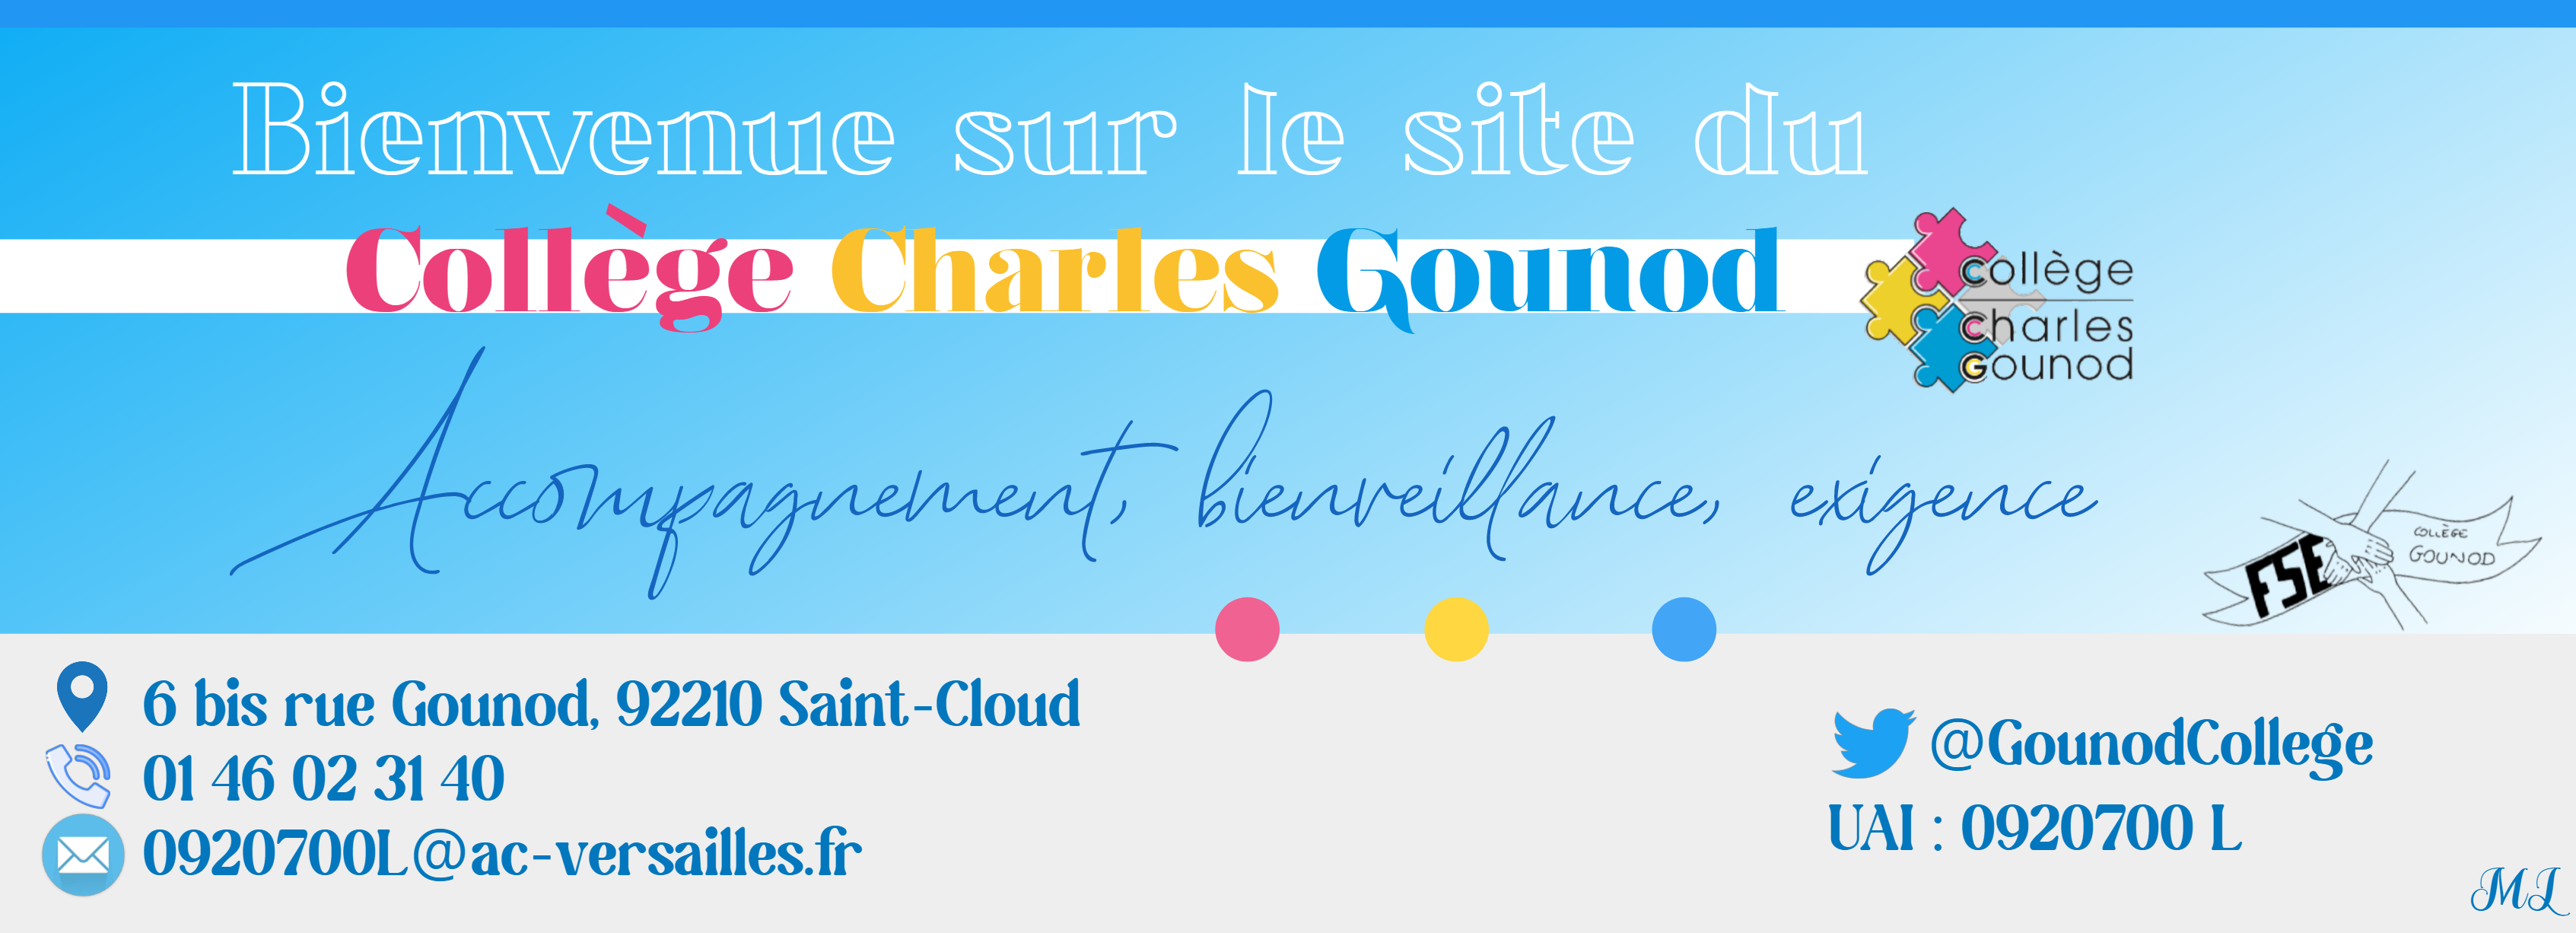 Collège Charles Gounod-St Cloud